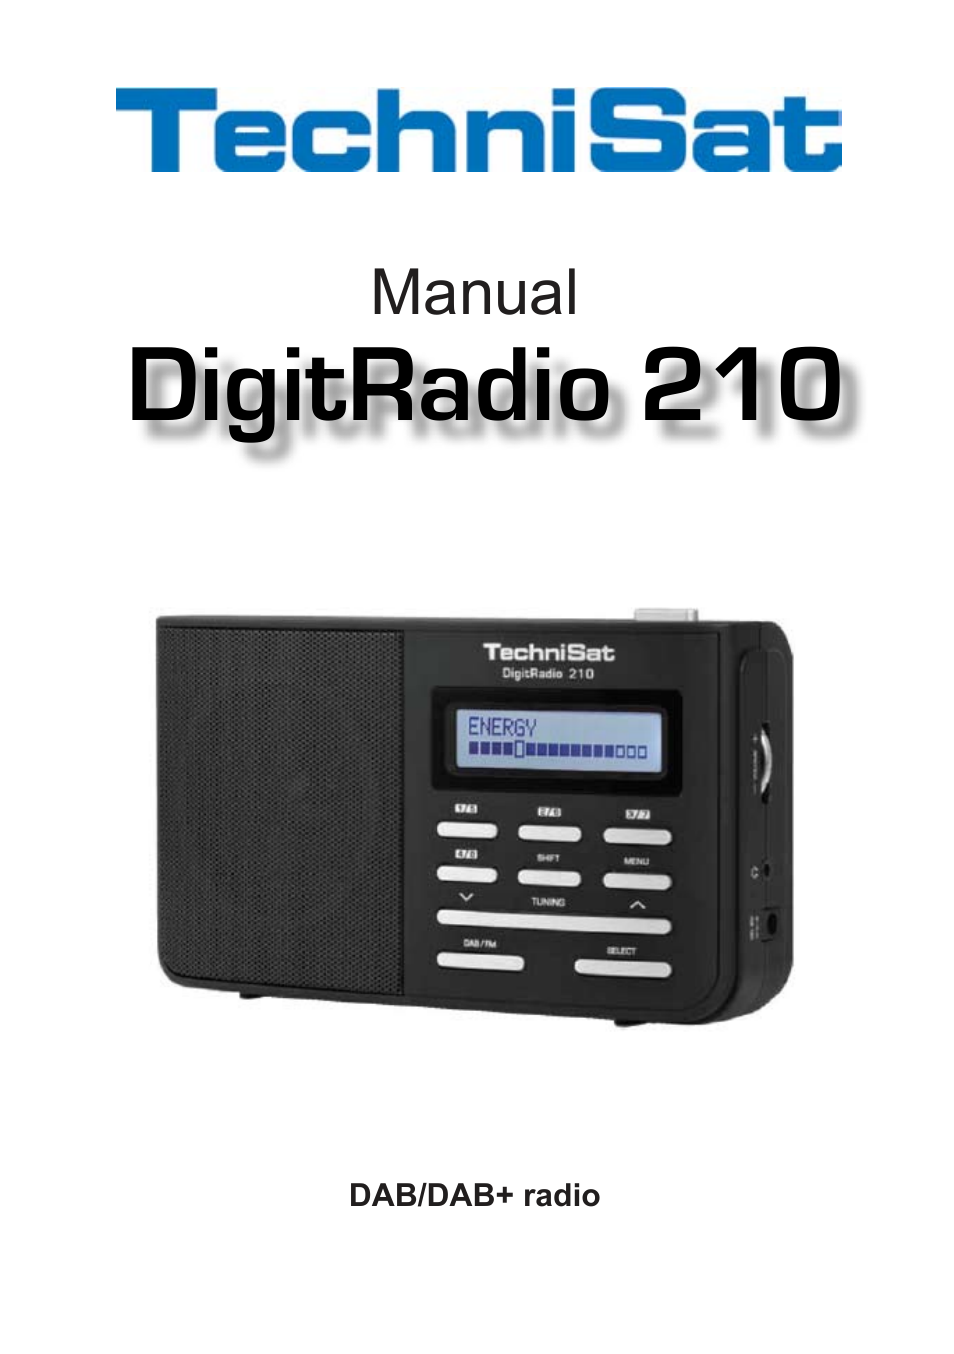 TechniSat DigitRadio 210 User Manual | 17 pages